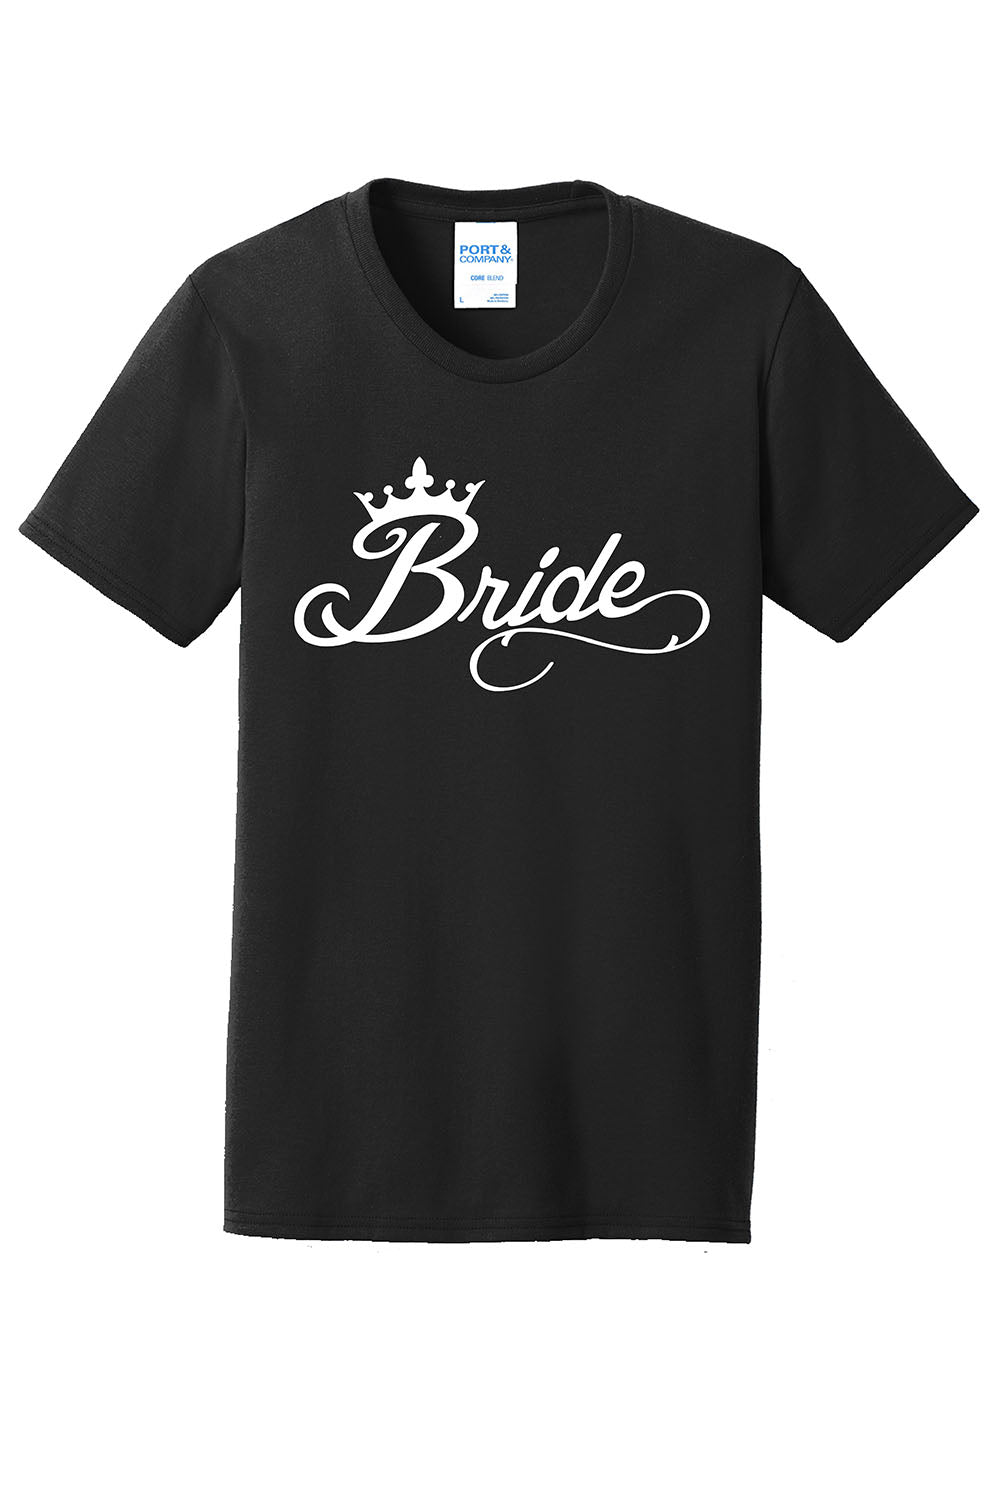 "Bride" T-shirt